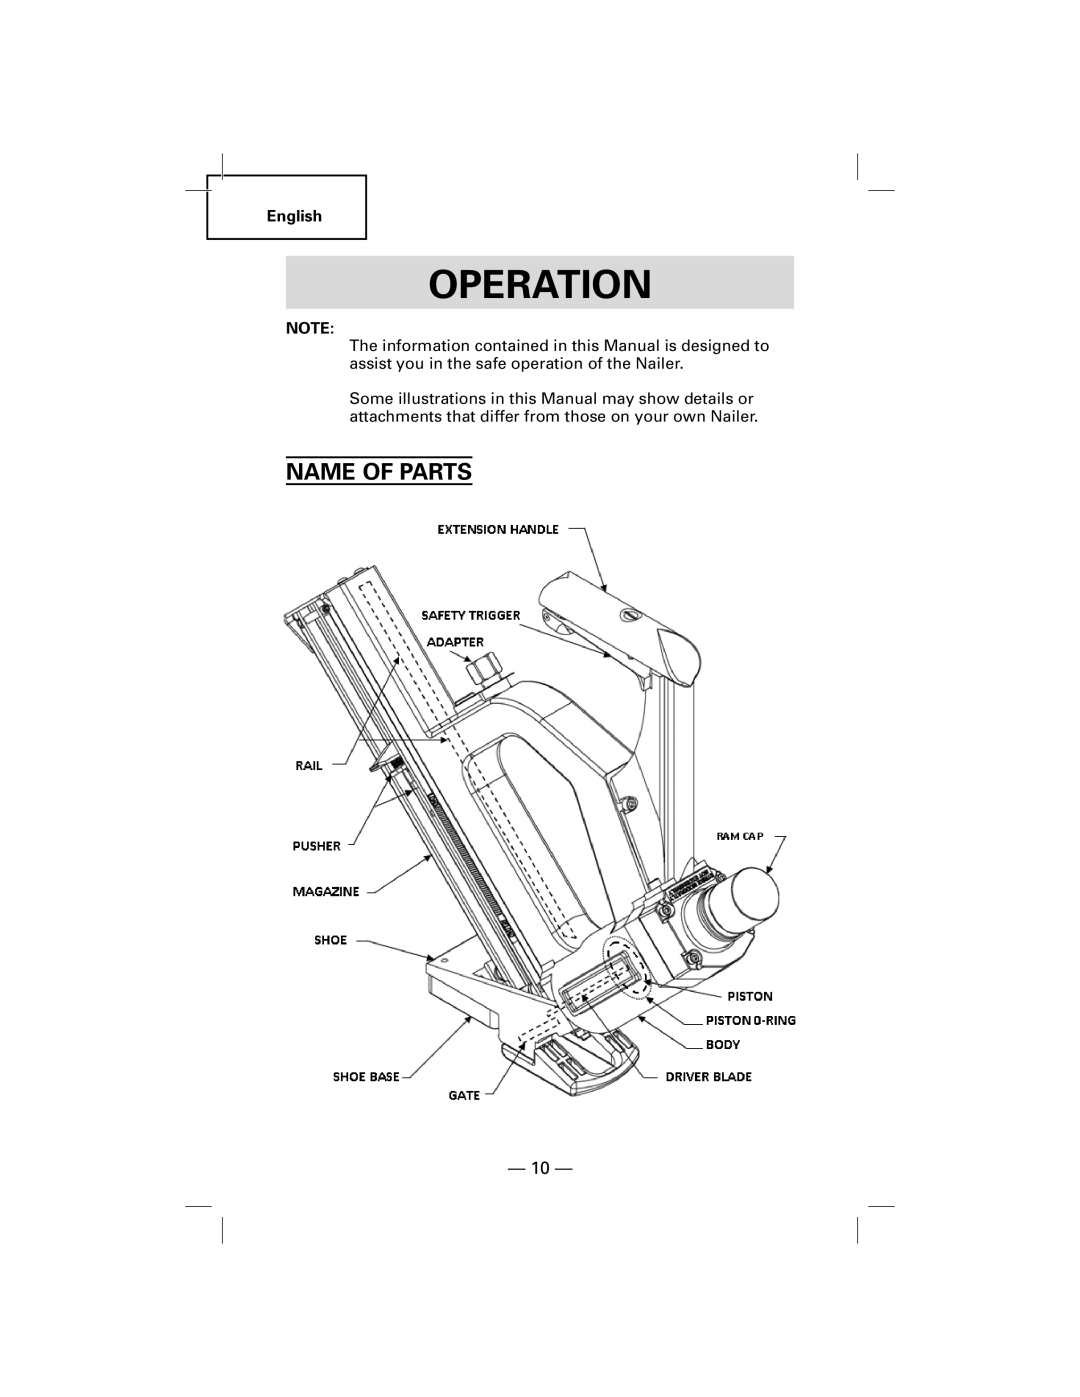 Hitachi NT50AGF manual Operation, Name Of Parts 